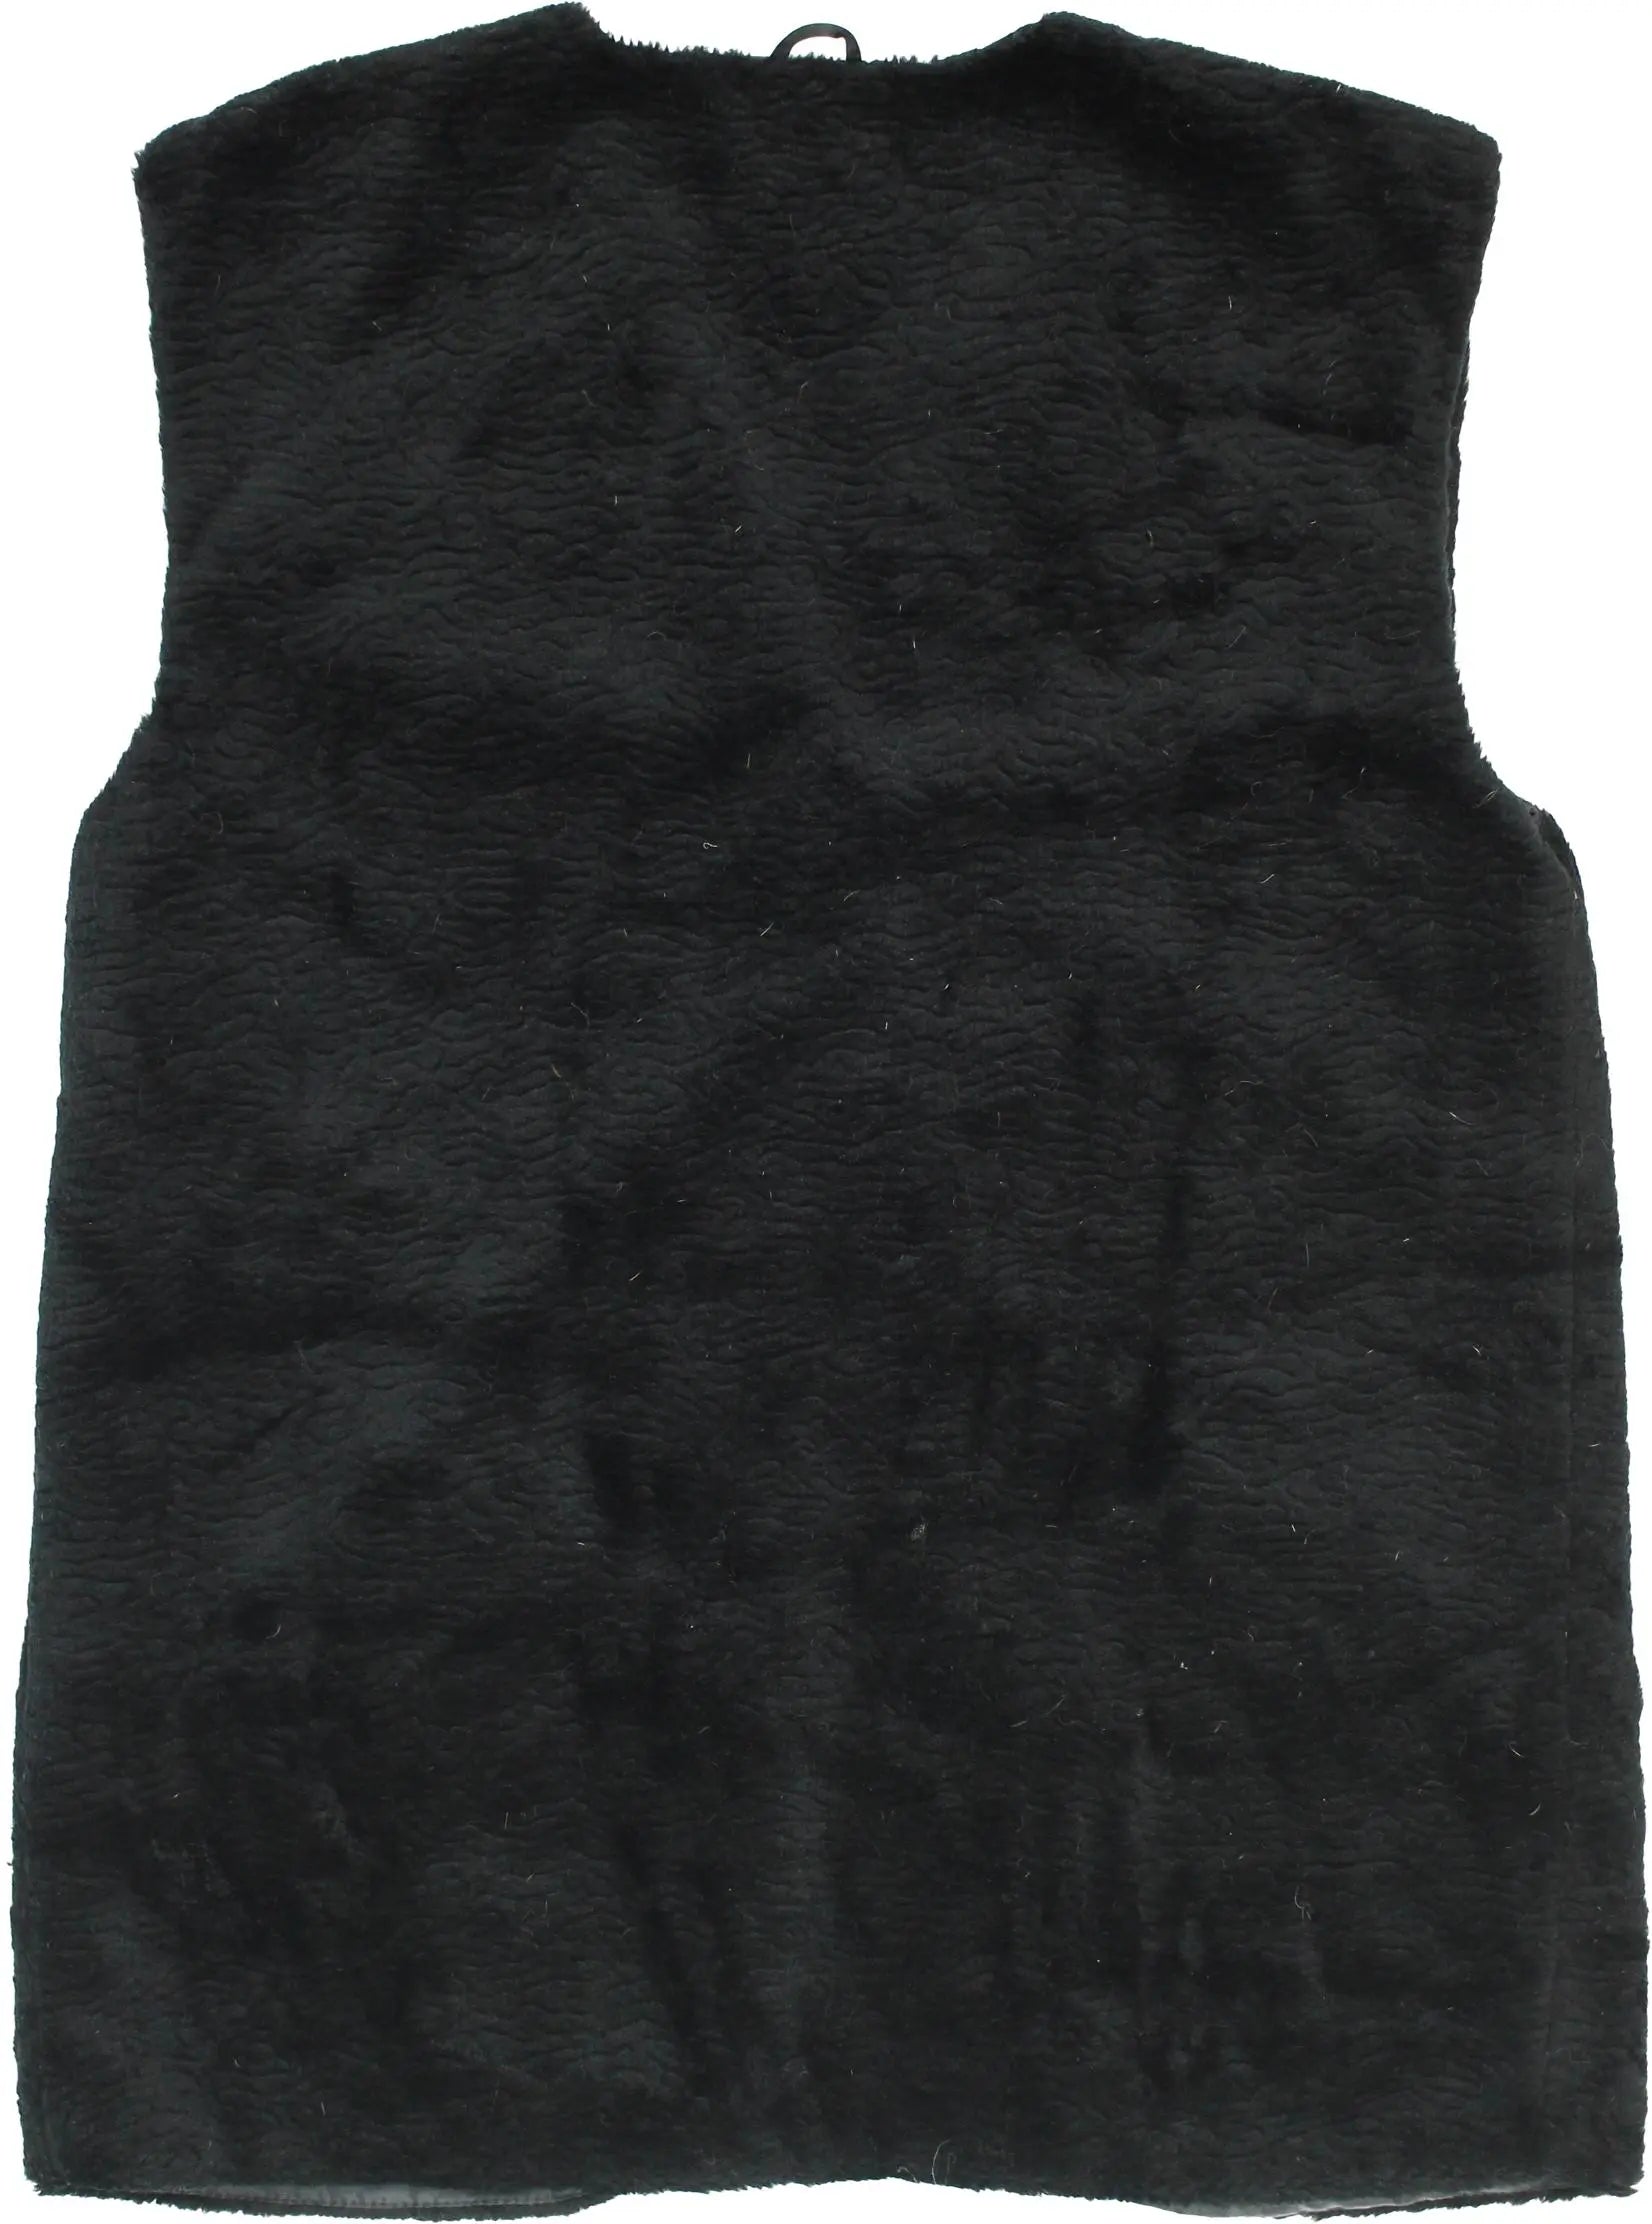 Blue Seven - Faux Fur Vest- ThriftTale.com - Vintage and second handclothing